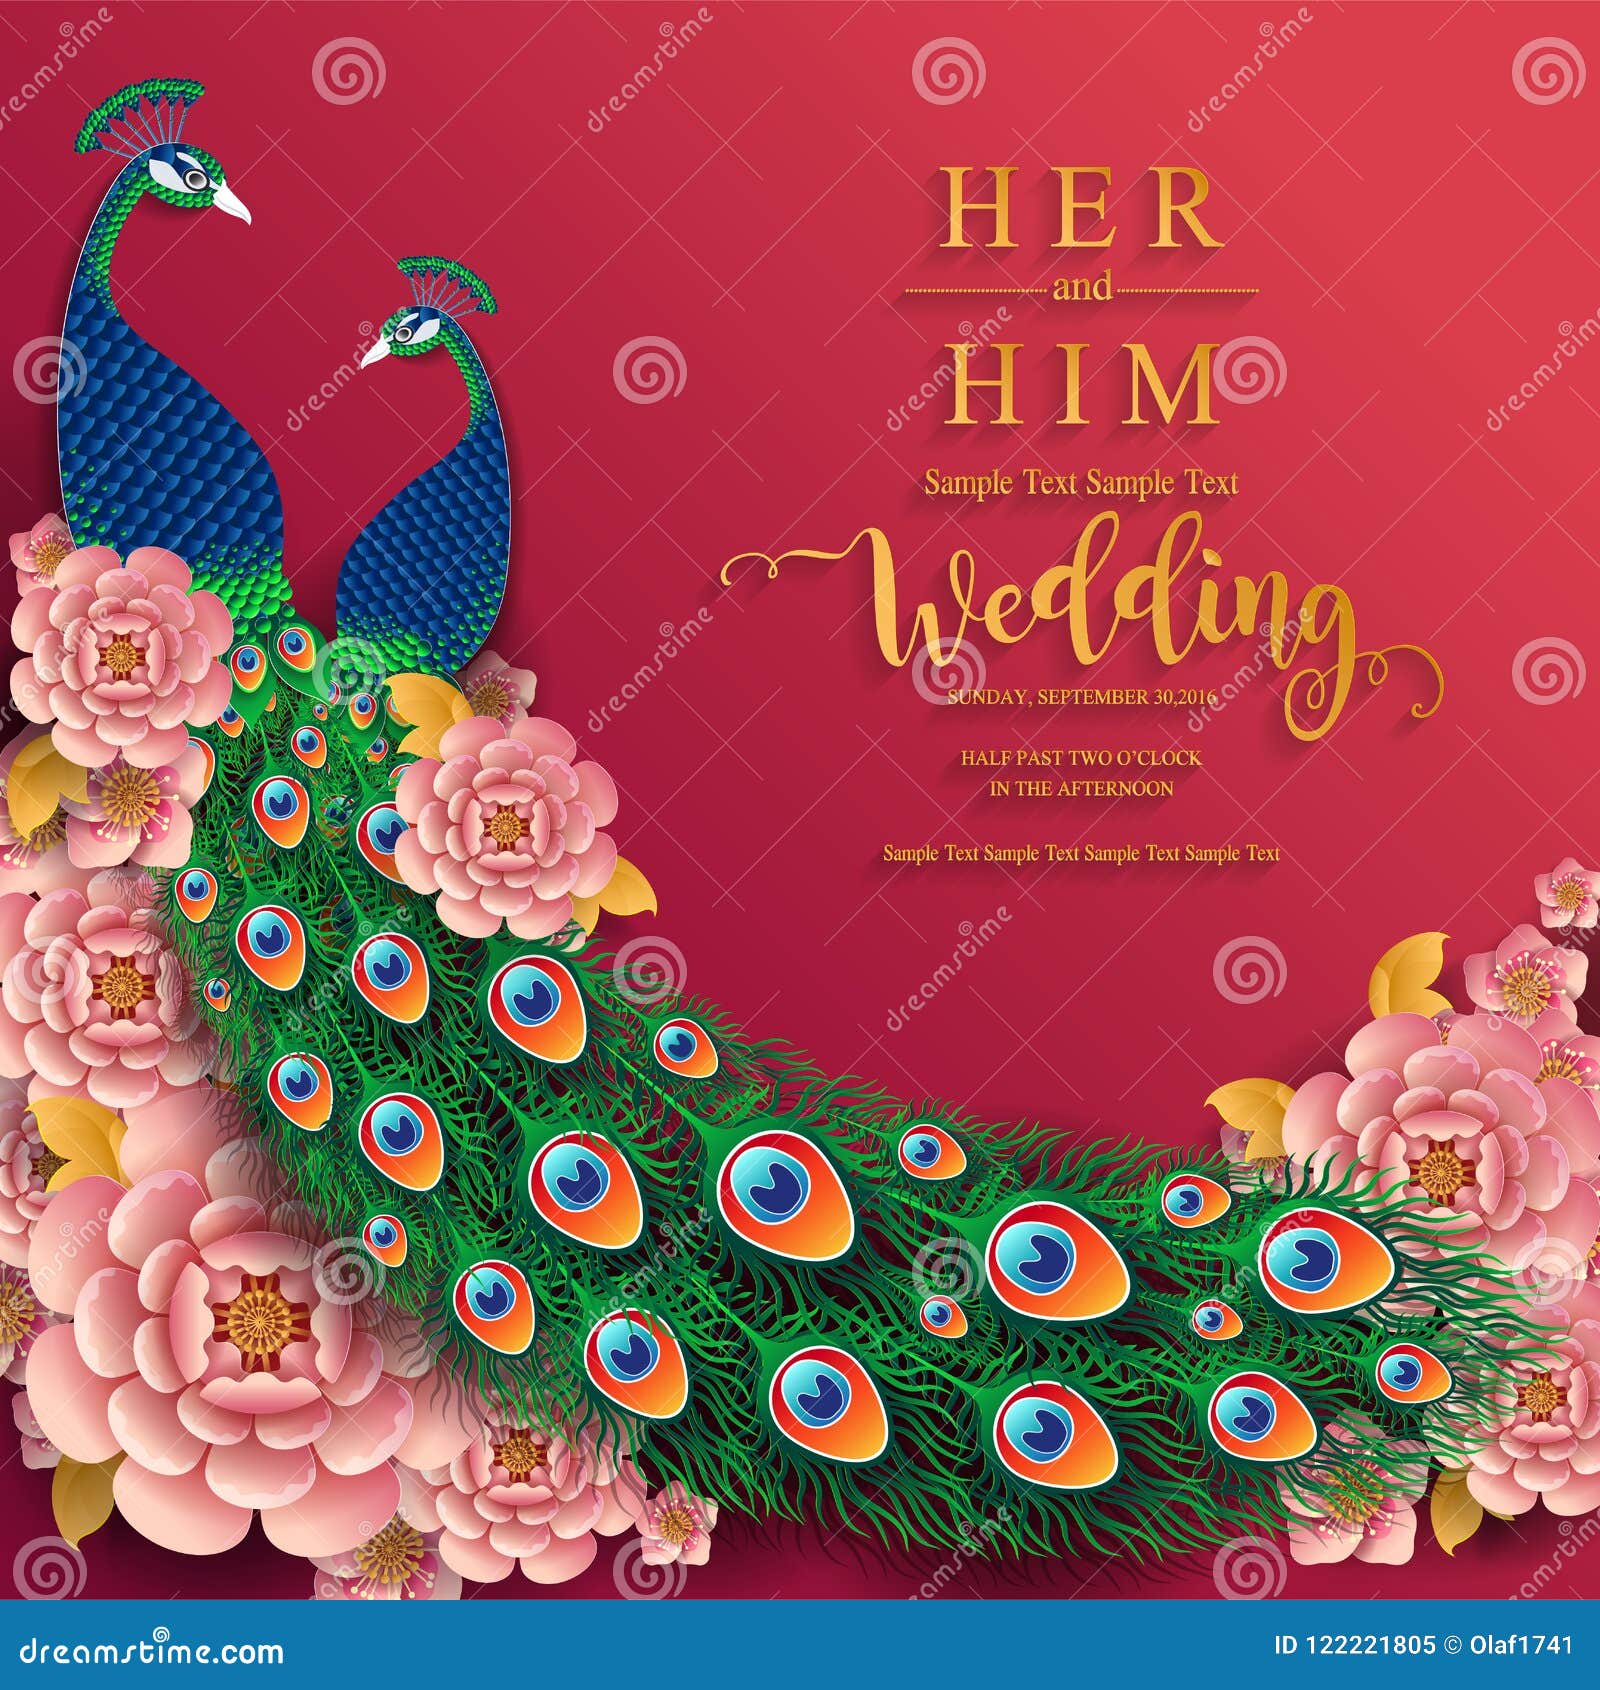 Indian Wedding Invitation Carddian Wedding Invitation Card With Regard To Indian Wedding Cards Design Templates